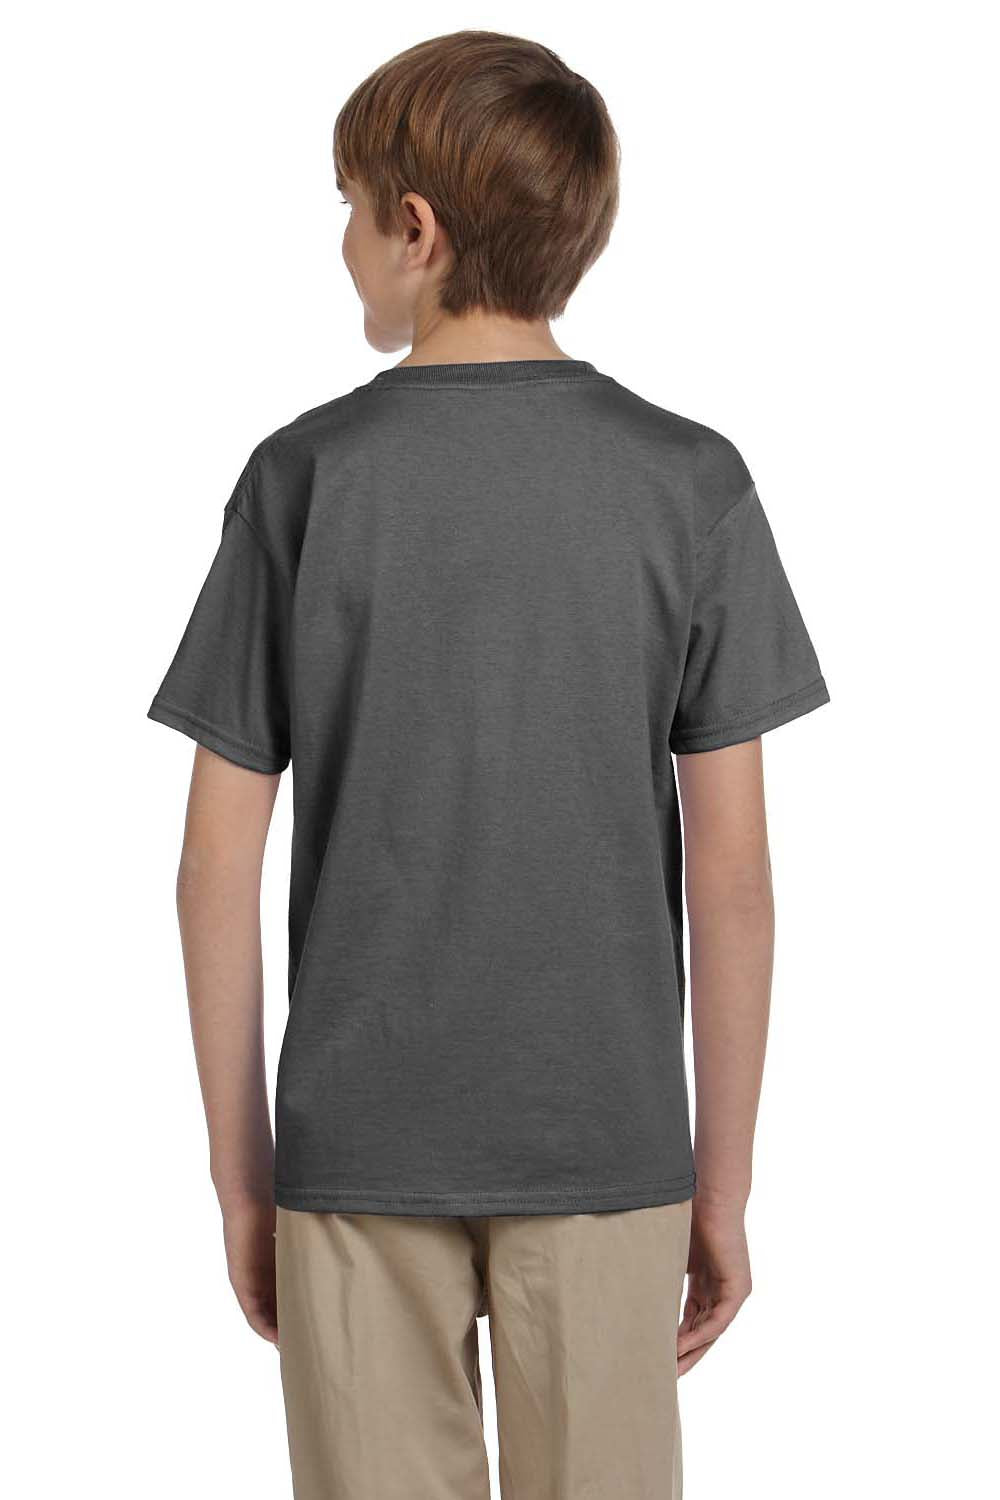 Hanes 5370 Youth EcoSmart Short Sleeve Crewneck T-Shirt Smoke Grey Back